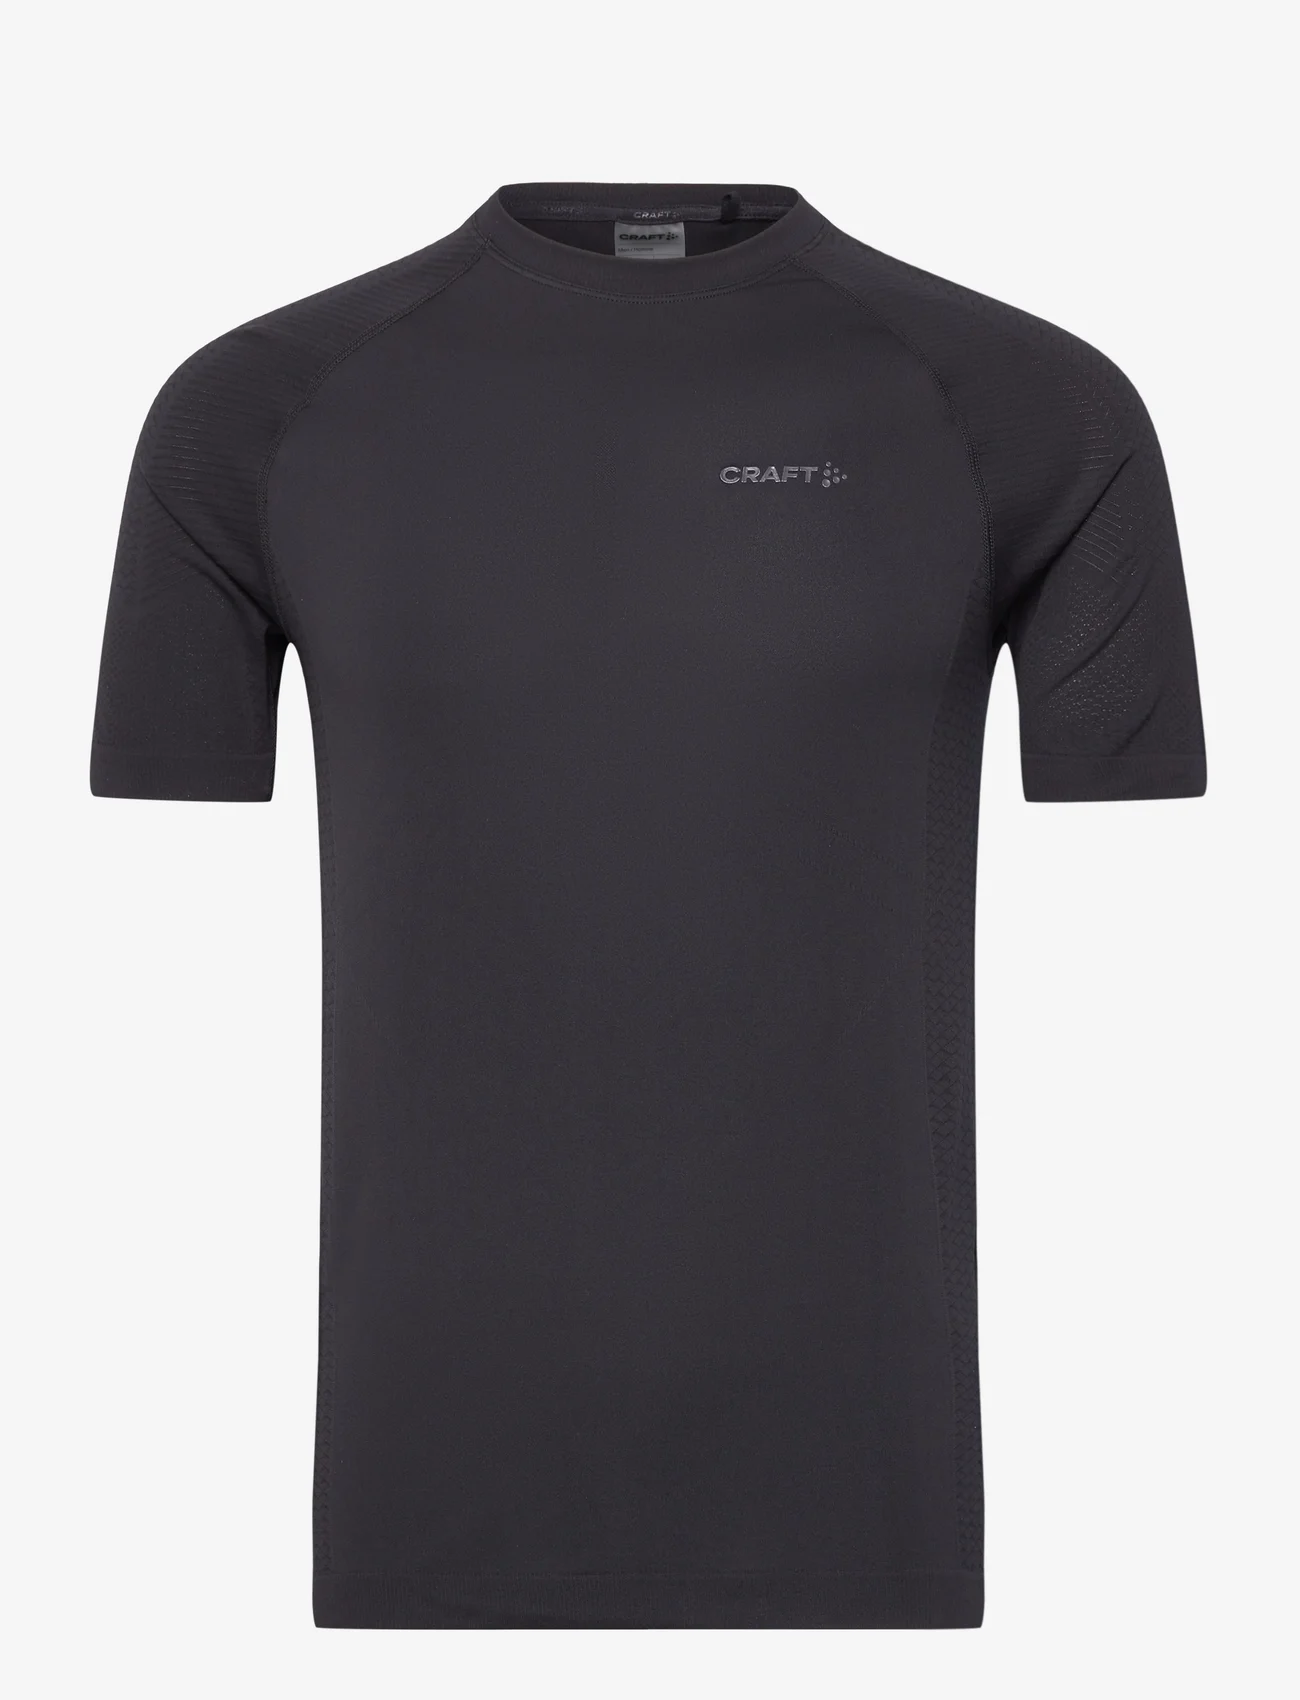 Craft - Adv Cool Intensity Ss Tee M - topper & t-skjorter - black - 1